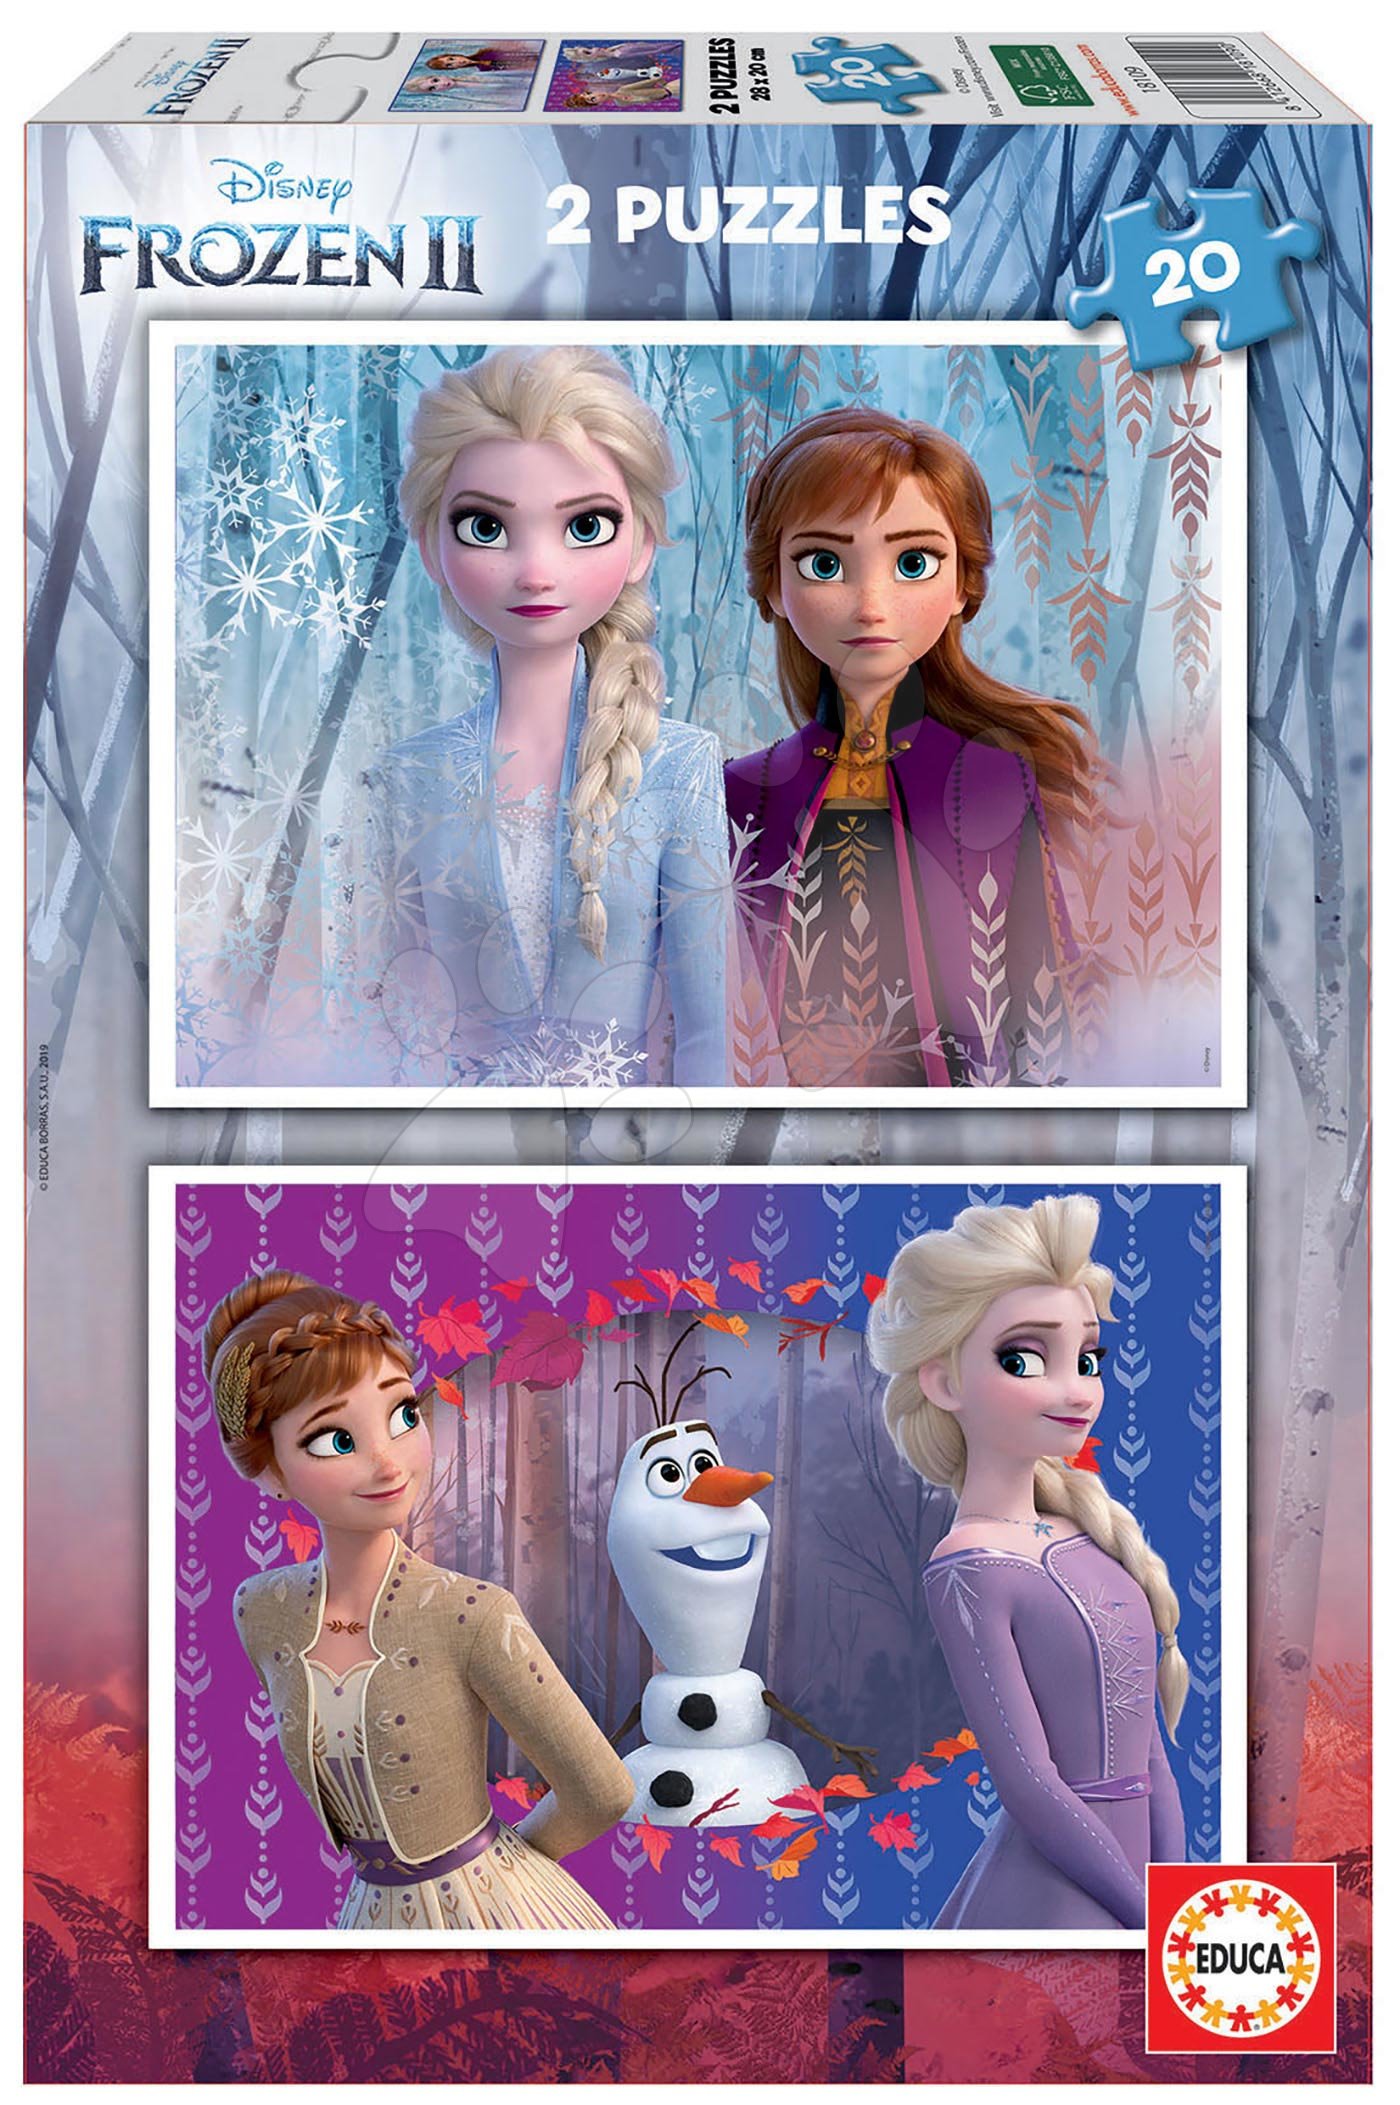 Detské puzzle do 100 dielov - Puzzle Frozen 2 Disney Educa 2x20 dielov od 4 rokov